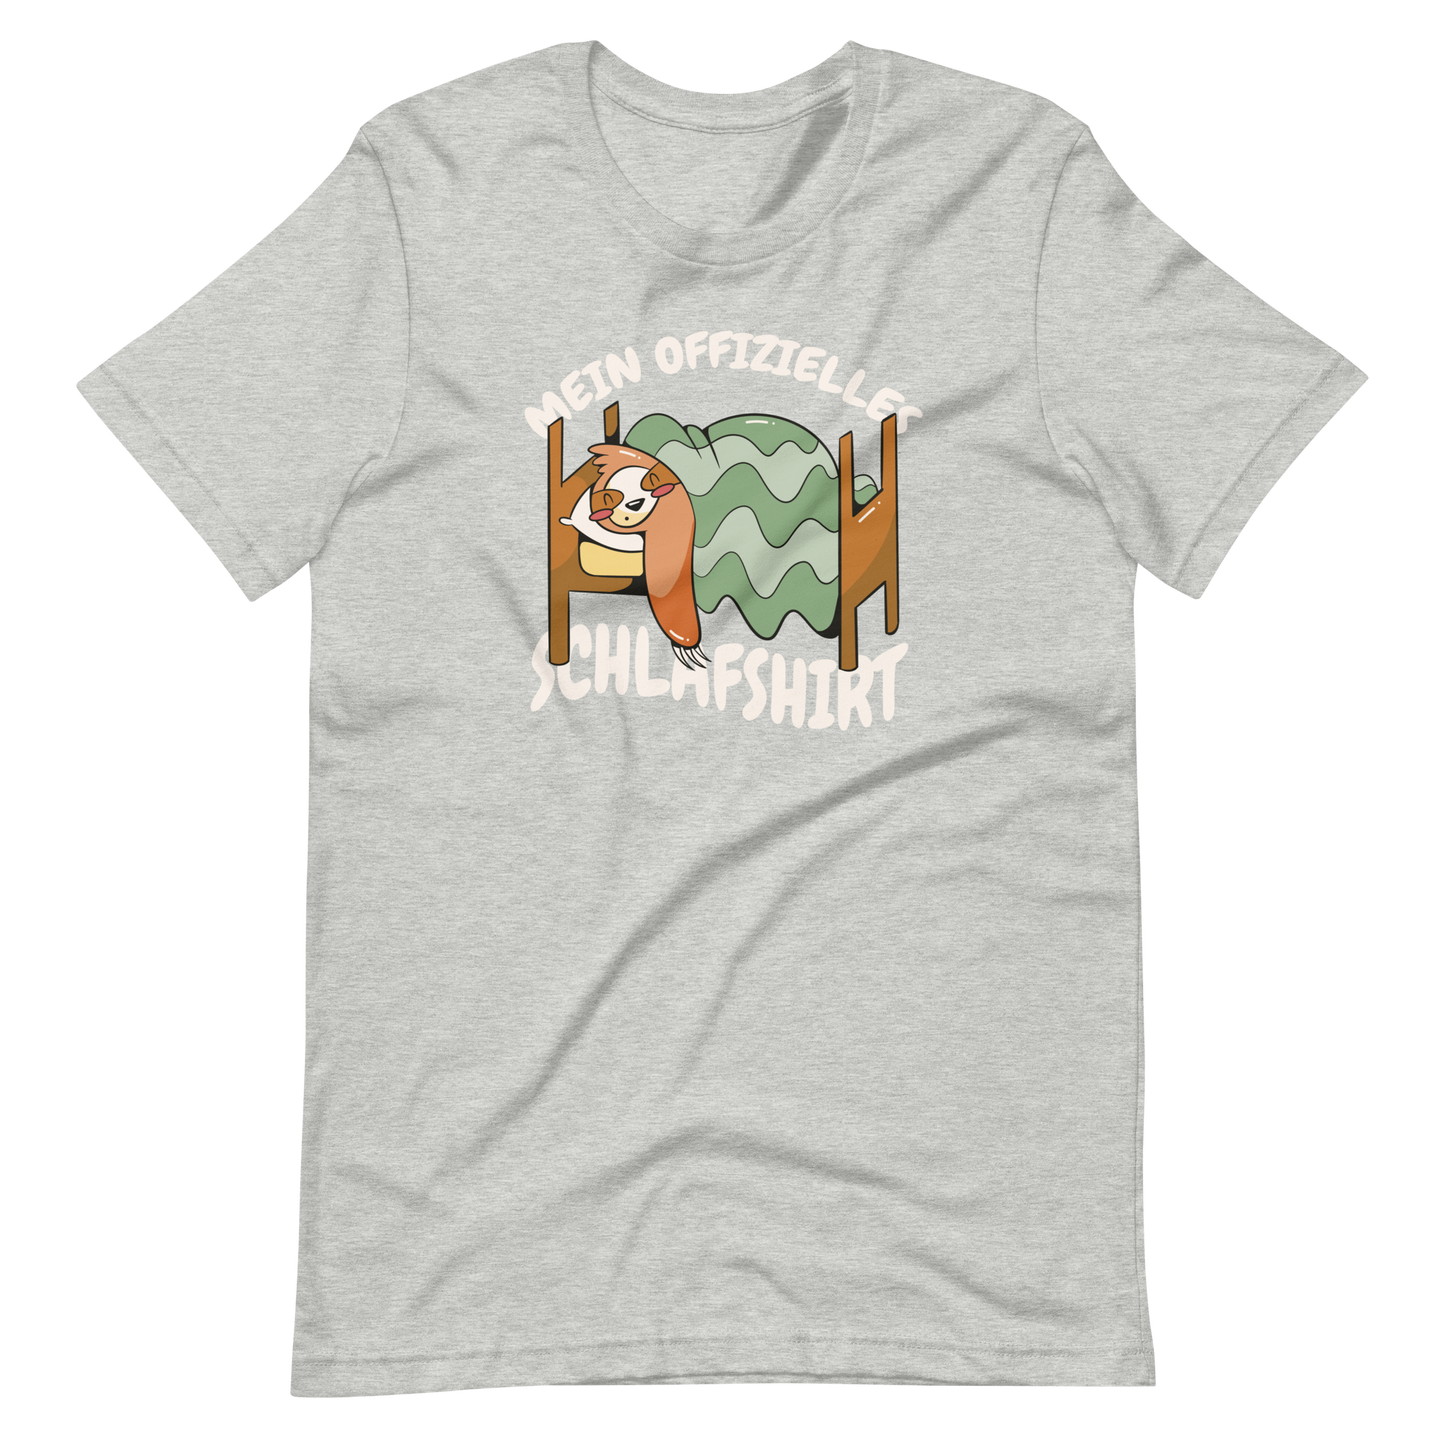 Sleeping sloth german | Unisex t-shirt